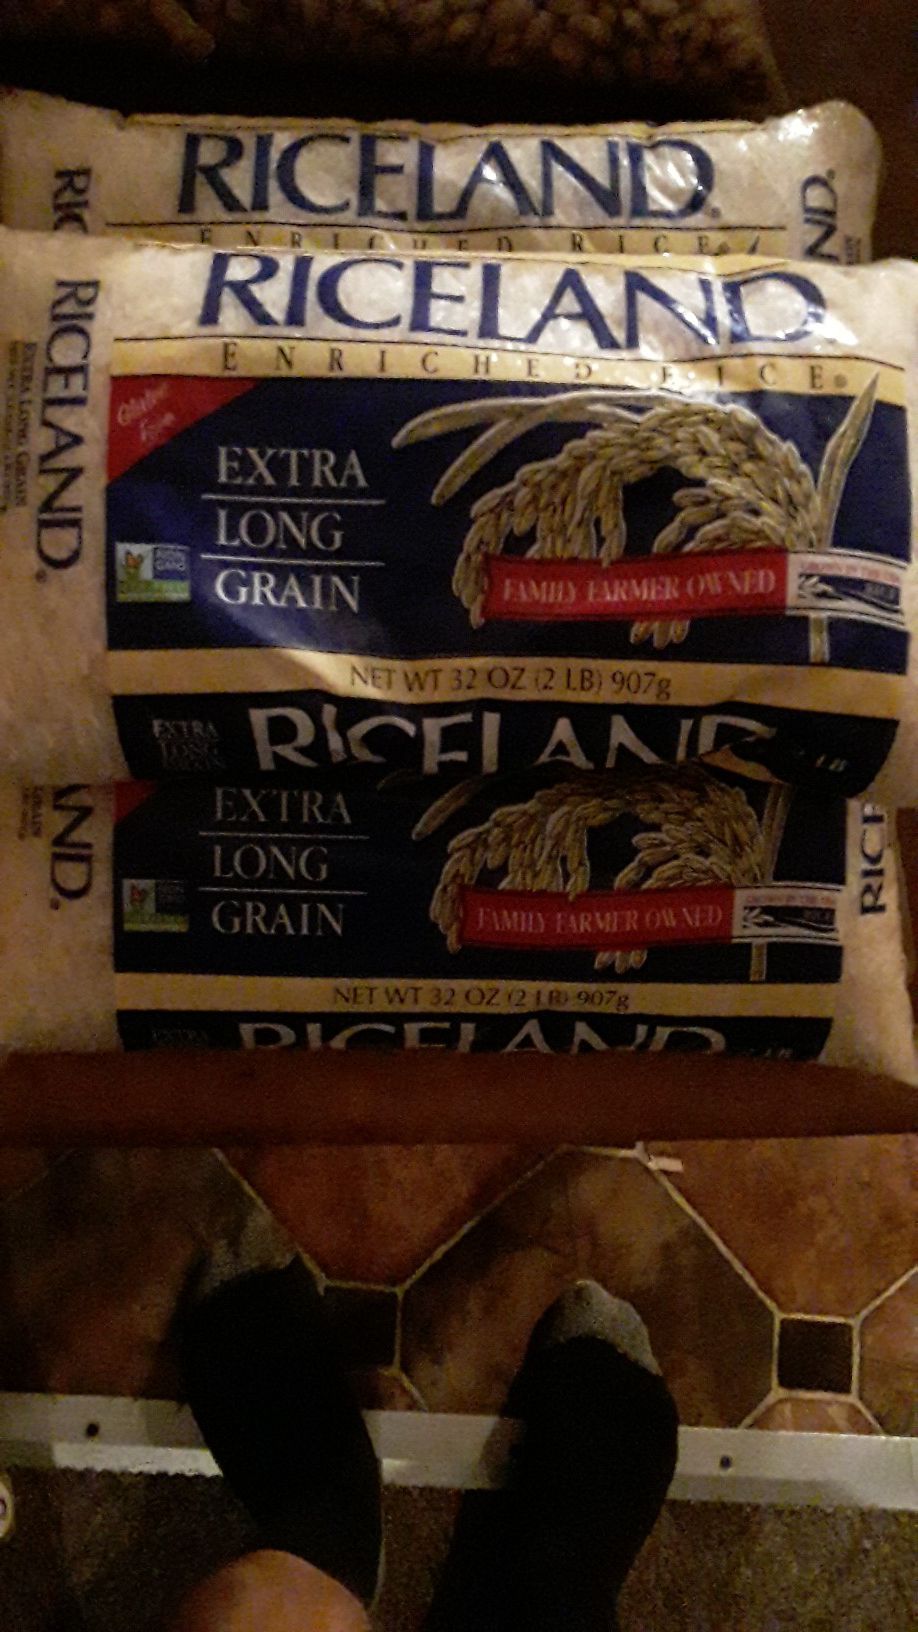 RiceLand Extra Long Grain Rice 32oz bags